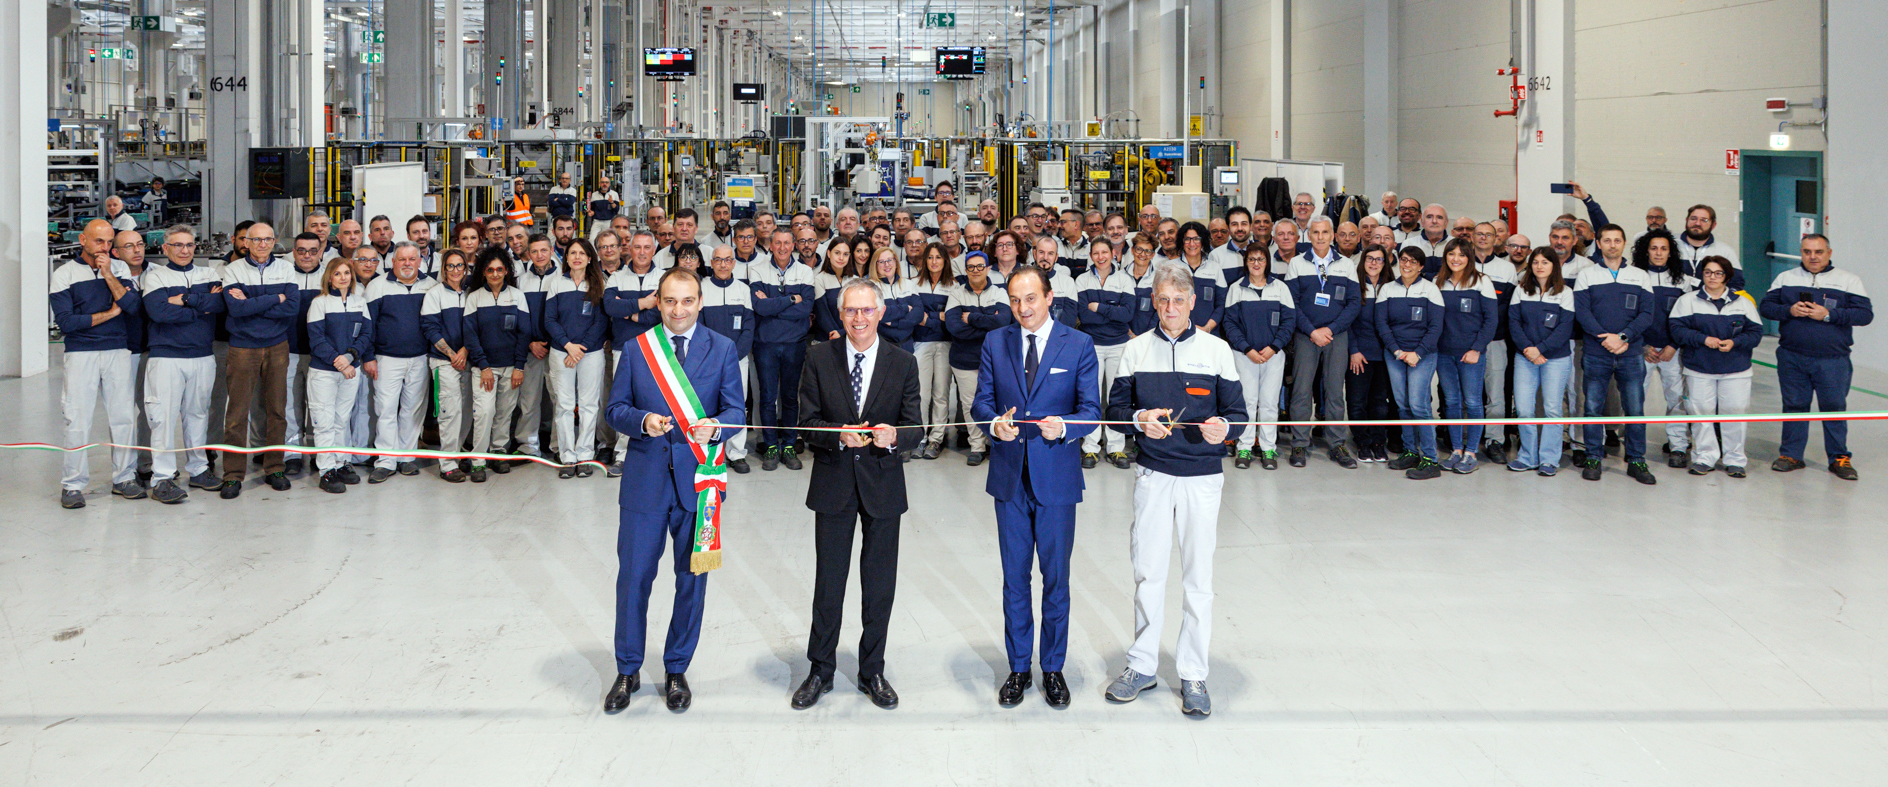 De gauche a droite: Stefano Lo Russo, Maire de Turin; Carlos Tavares, CEO de Stellantis; Alberto Cirio, Président de la région Piémont; Leonardo Rossi, Stellantis eDCT Plant Manager